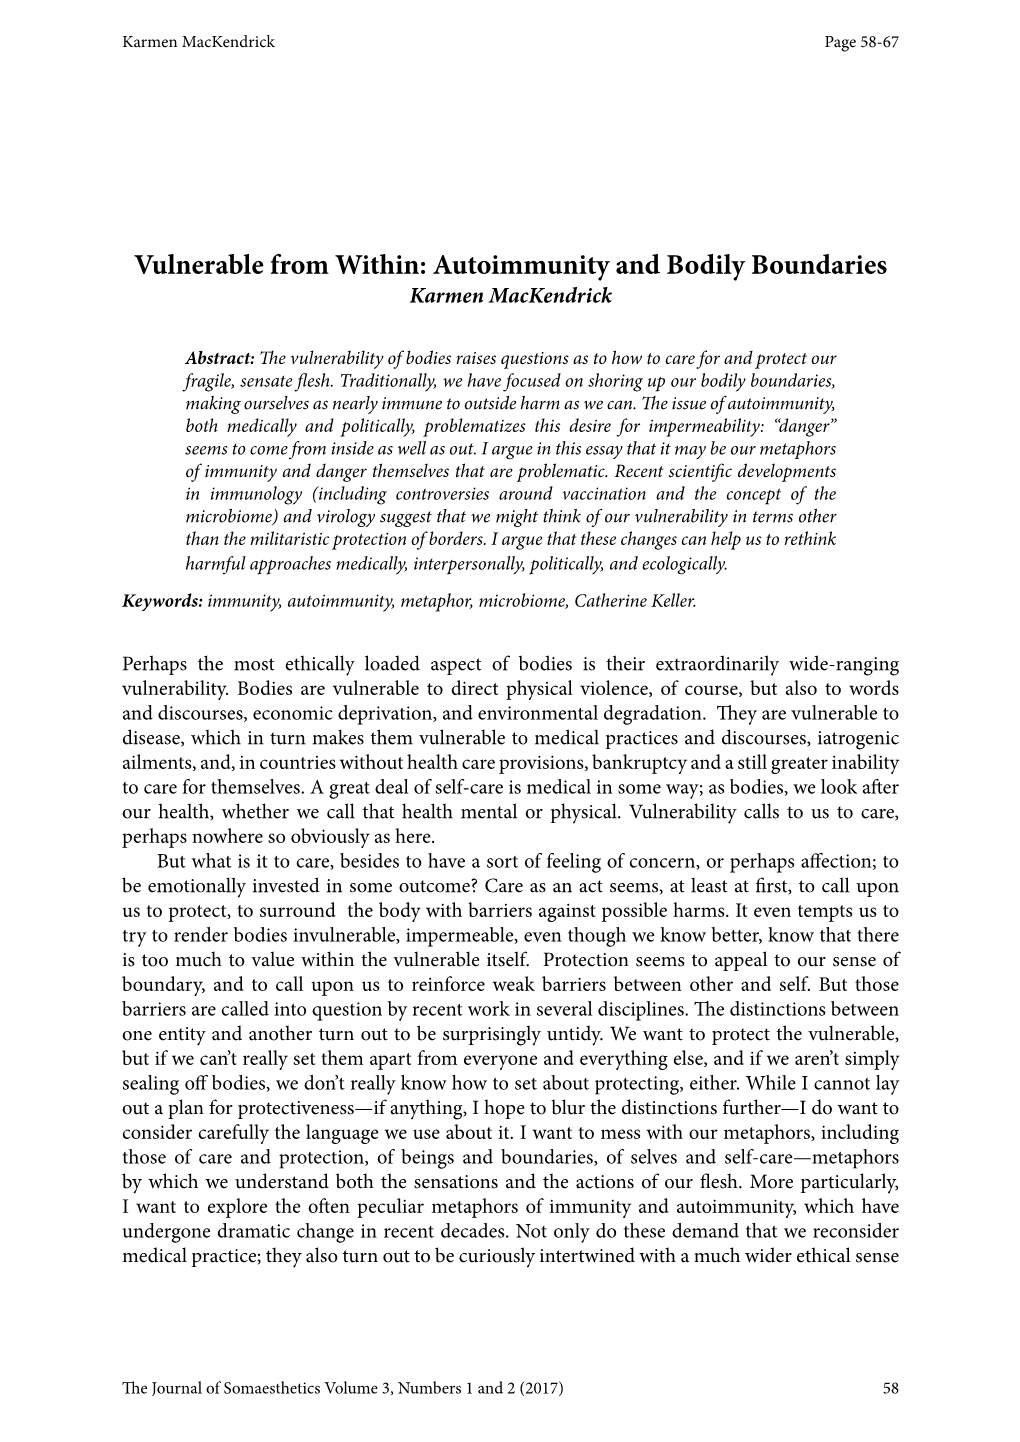 Autoimmunity and Bodily Boundaries Karmen Mackendrick